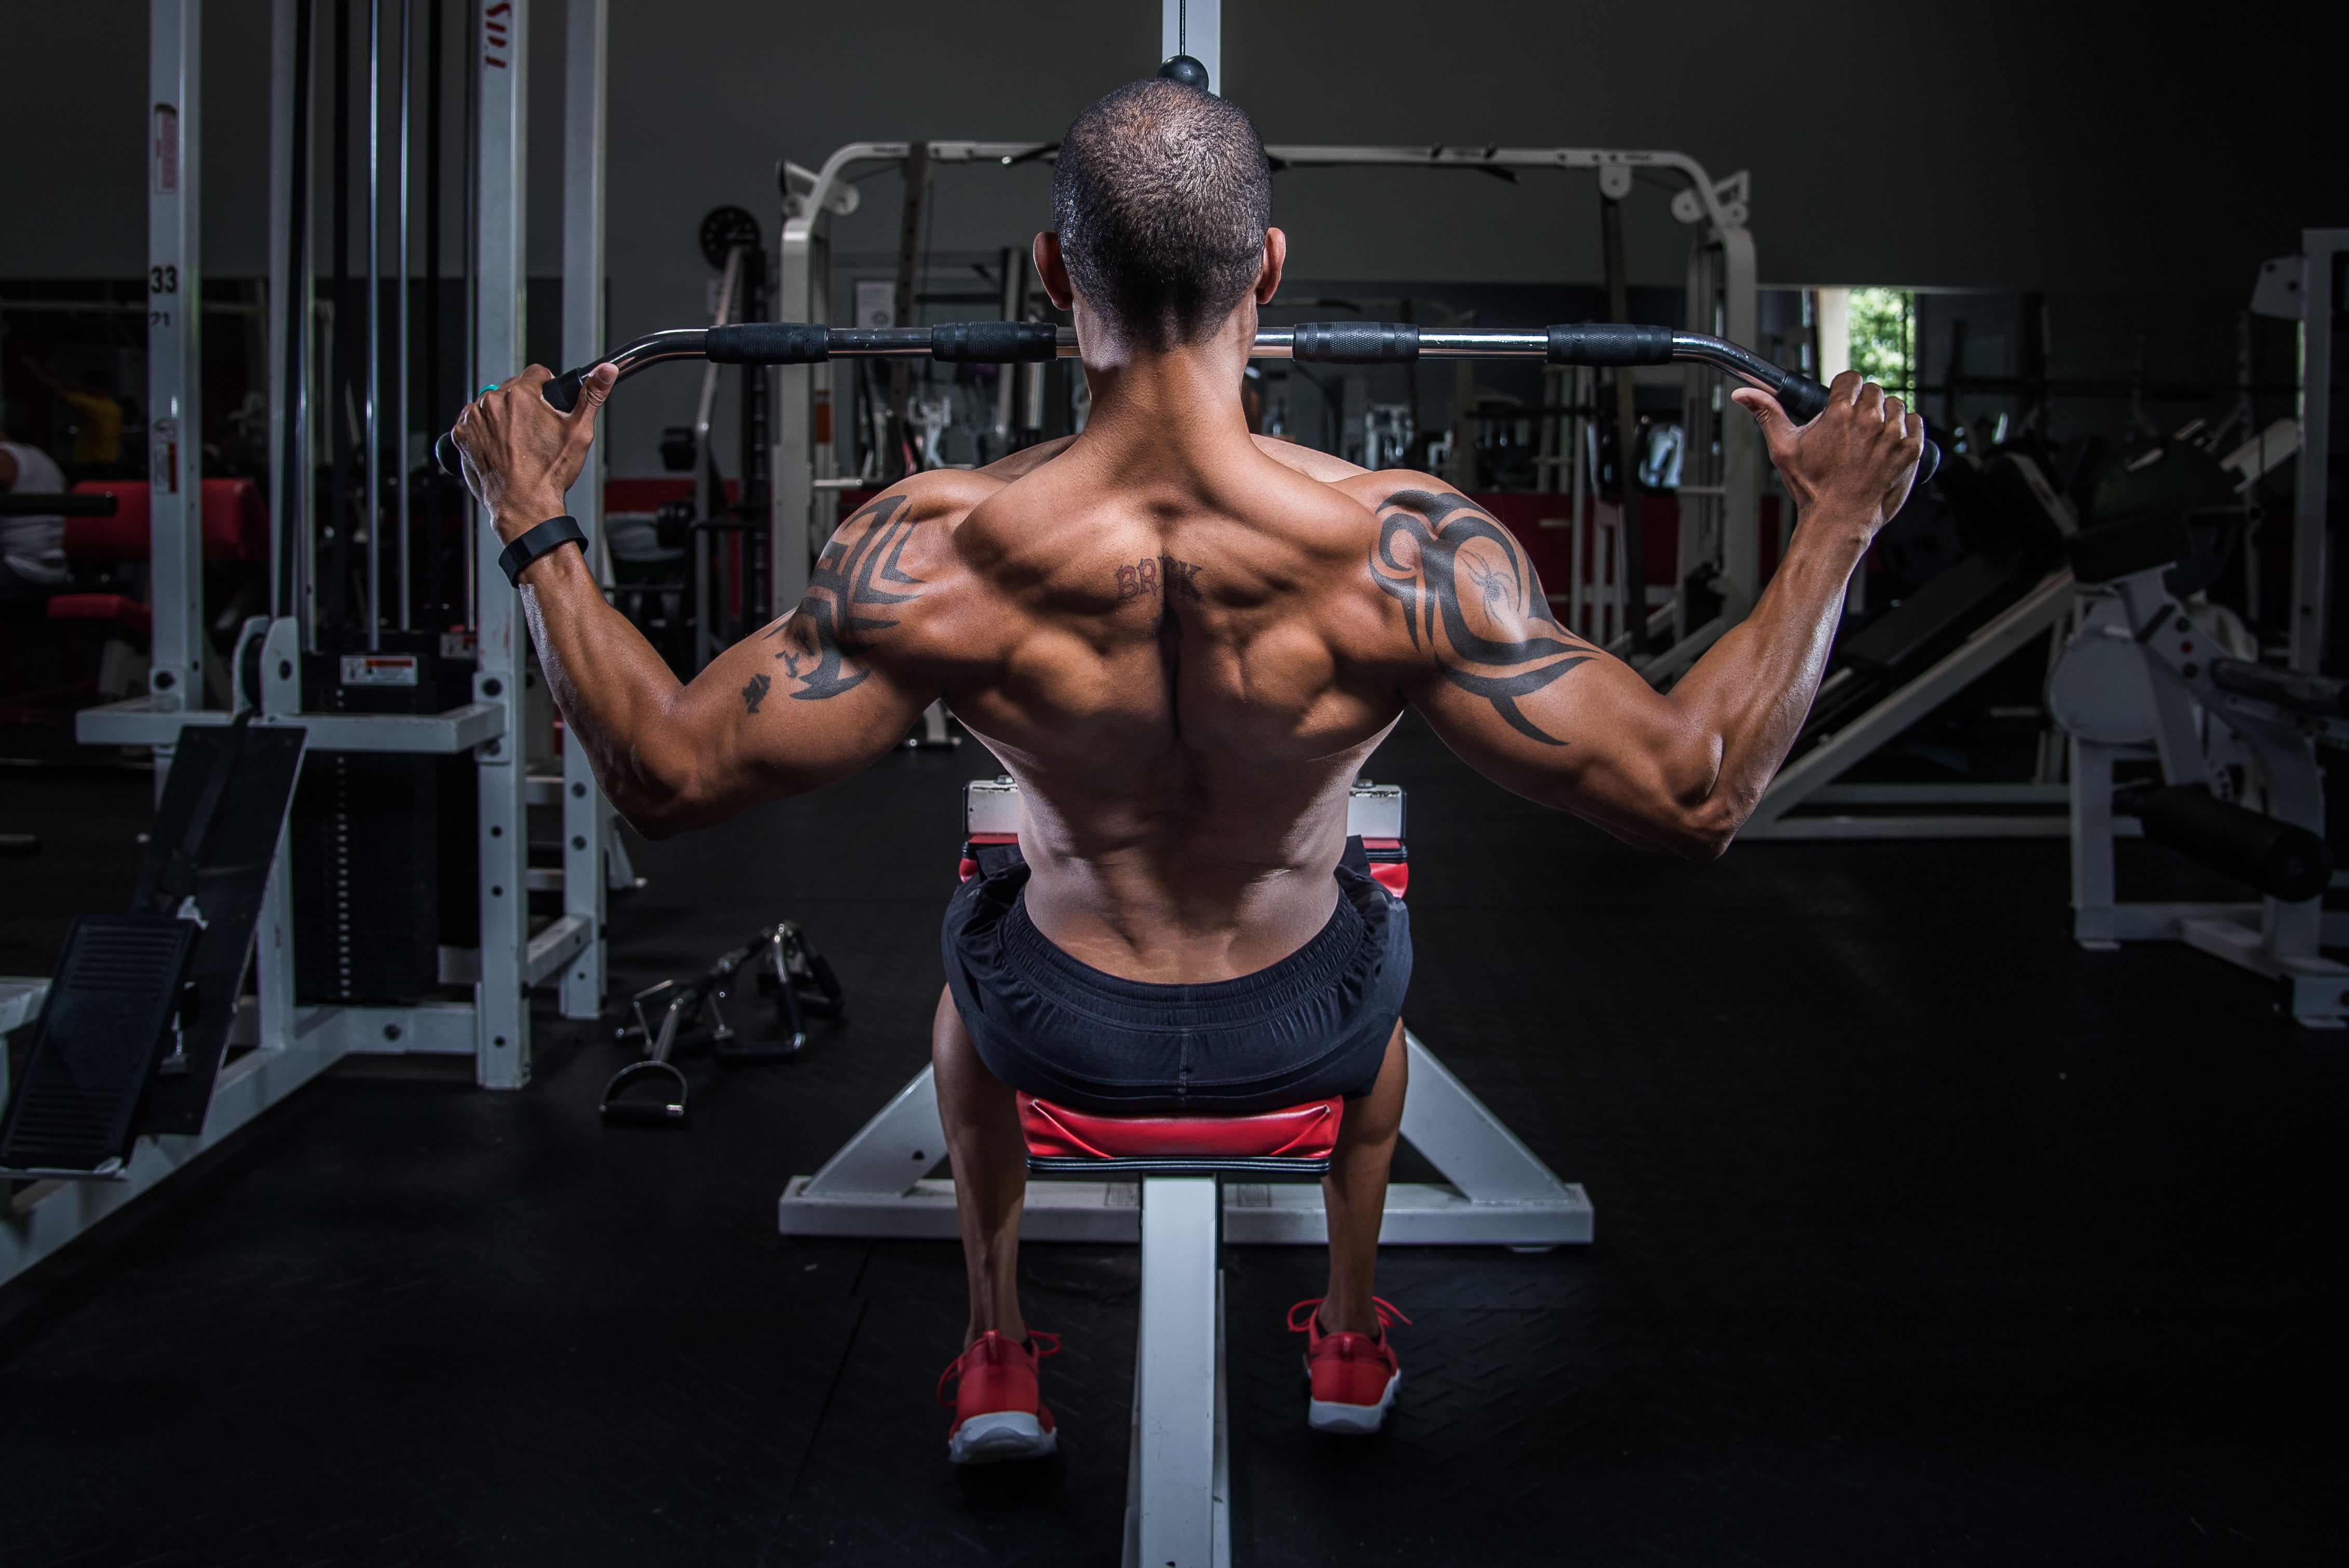 grey and black exercise equipment #man #back #workout #bodybuilding K # wallpaper #hdwallpaper #desktop. Muscle fitness, Workout, Men's muscle